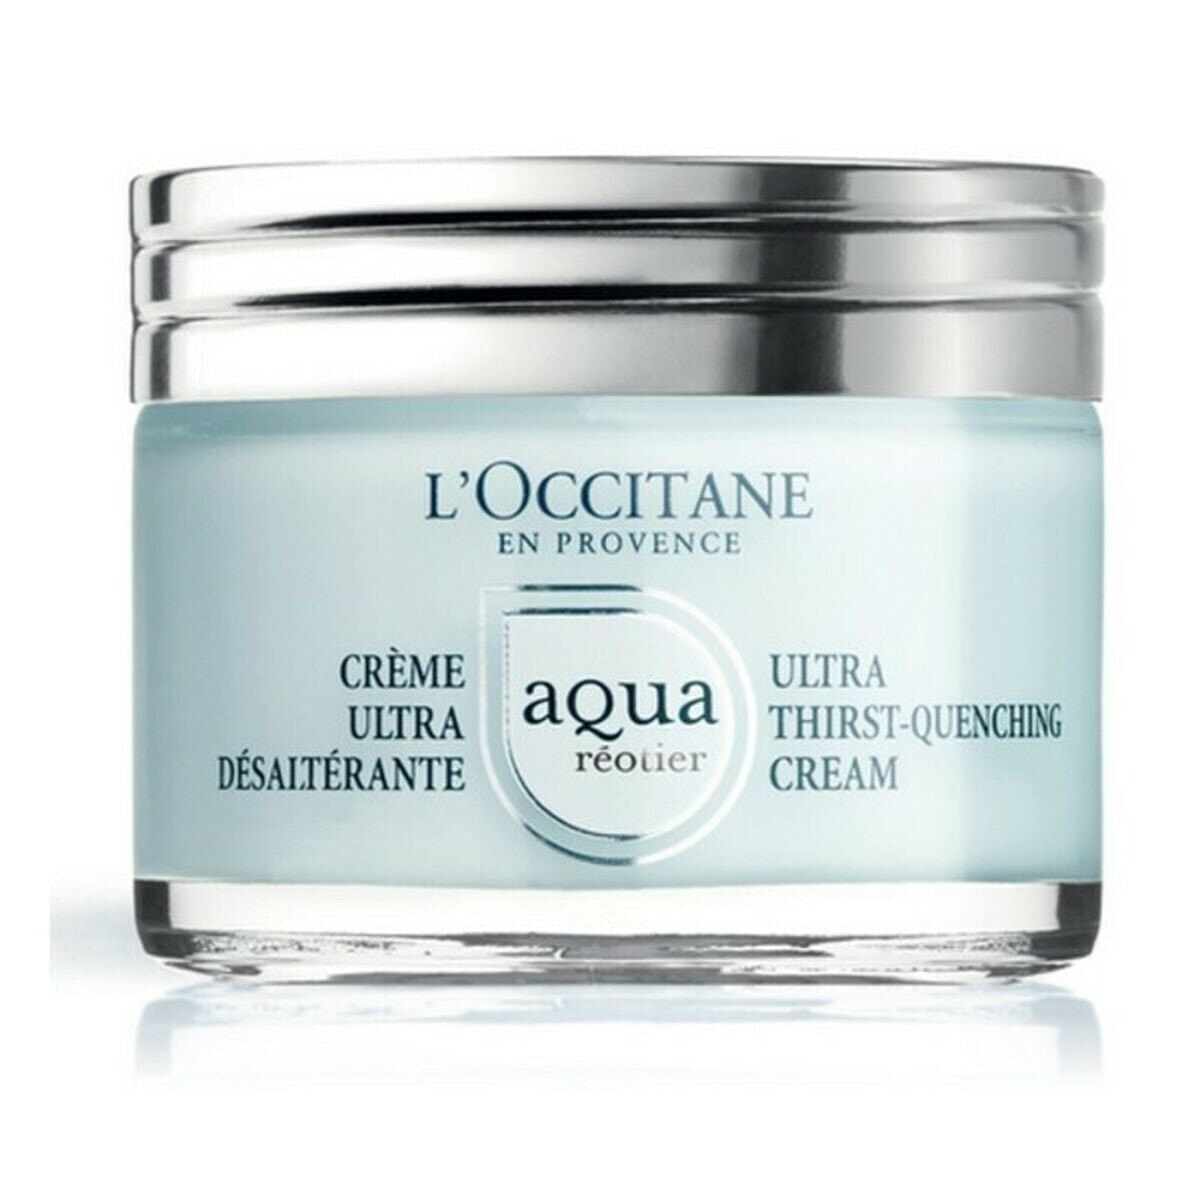 Ультра-увлажняющий крем Aqua L'occitane I0086120 (50 ml) 50 ml